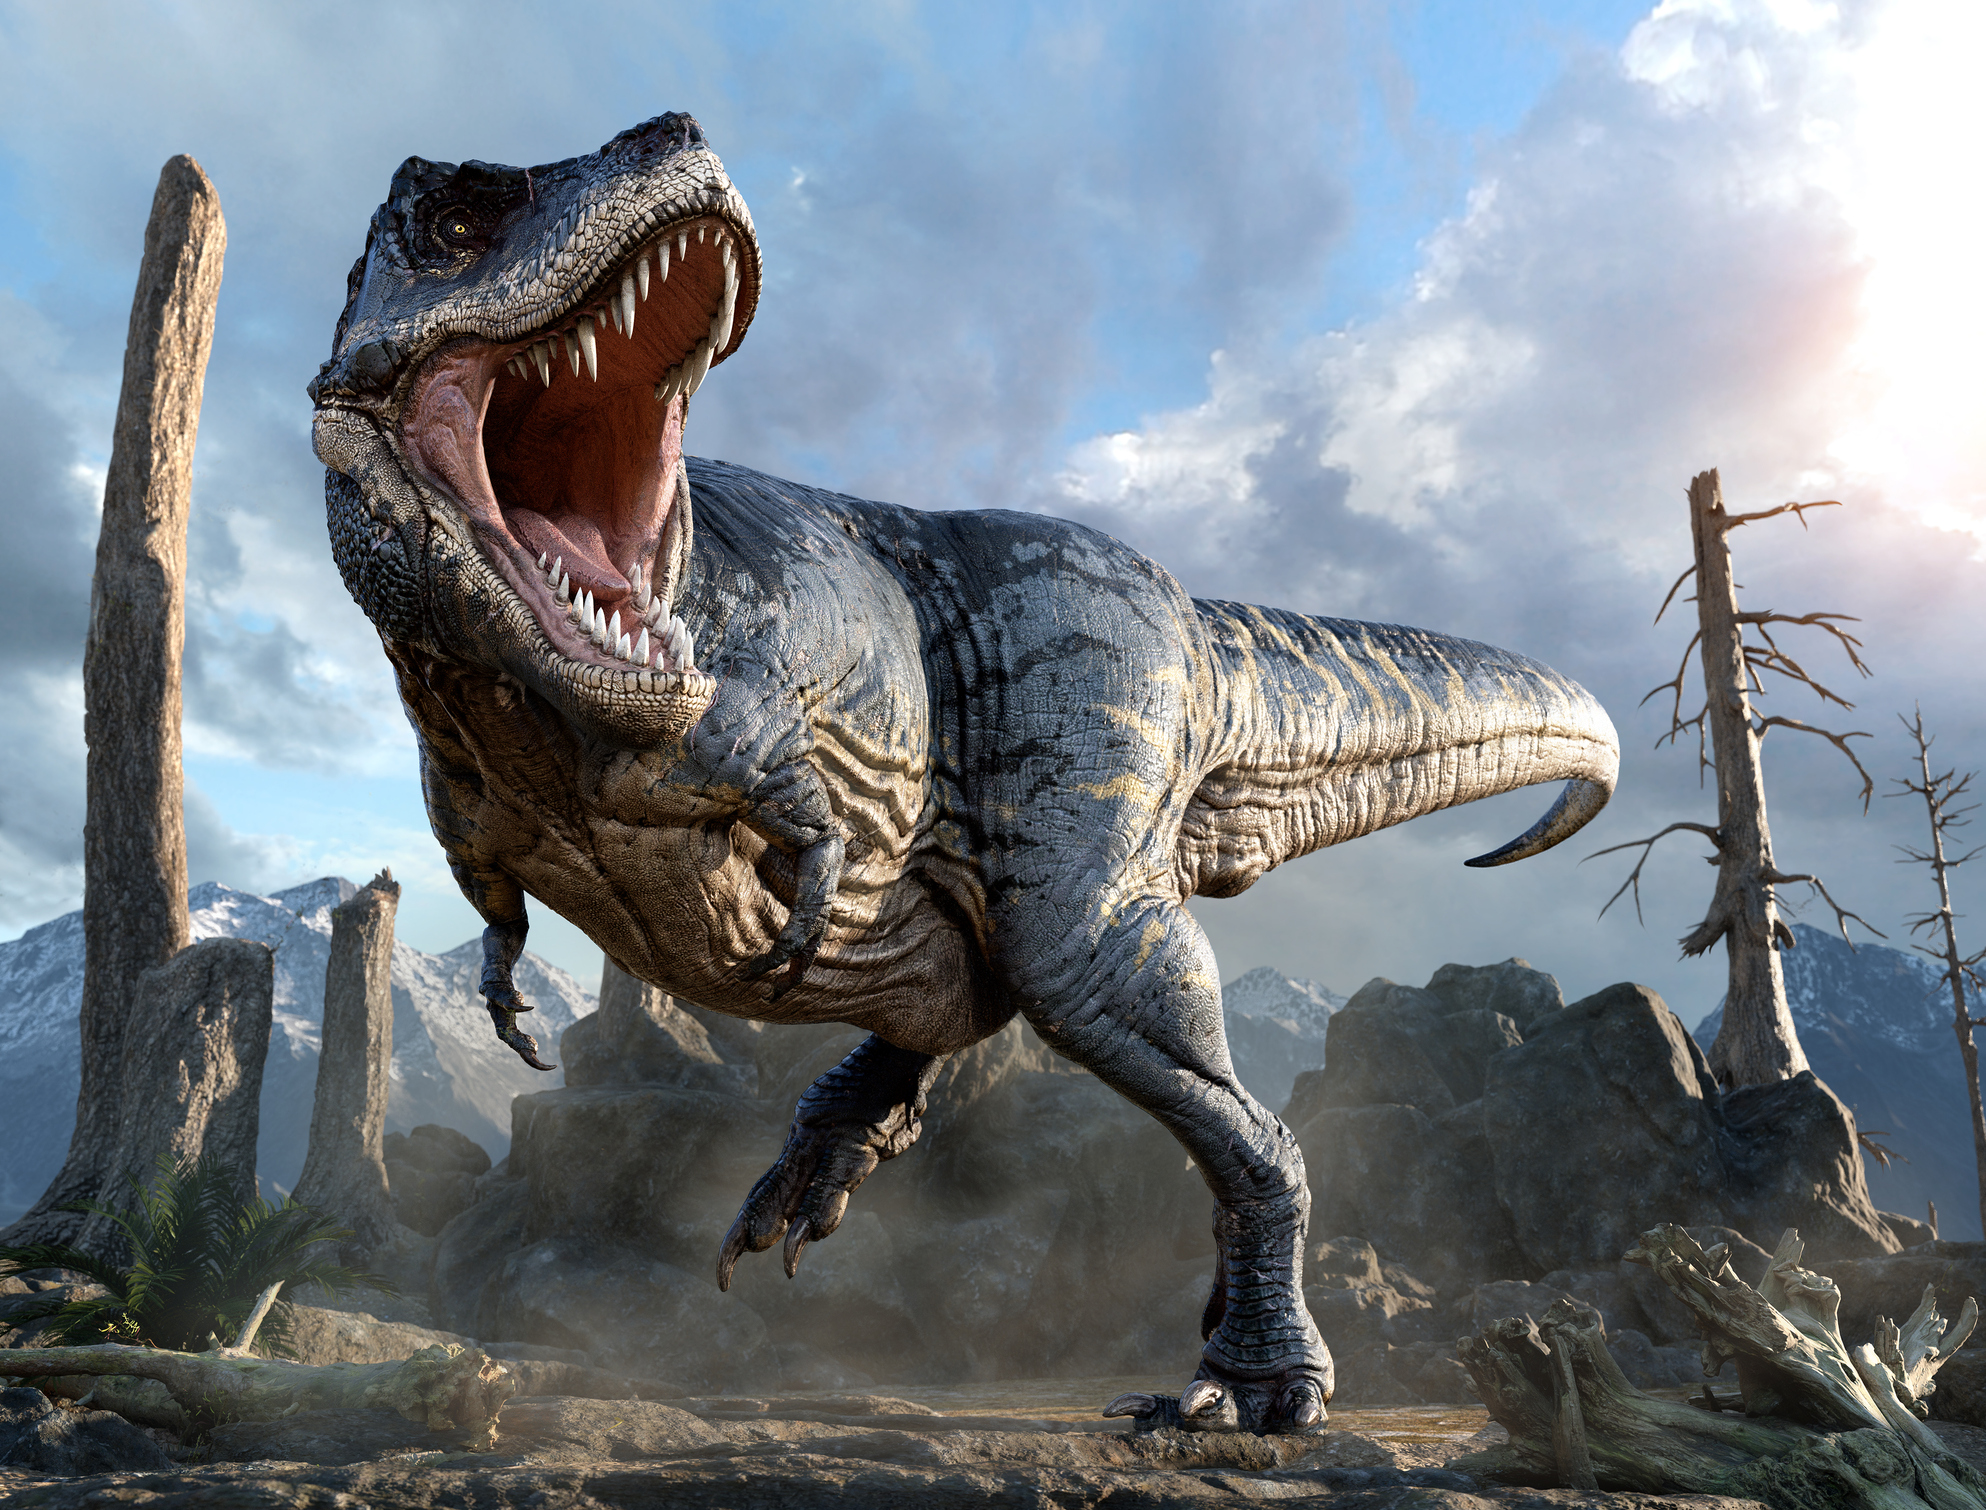 El ‘Tyrannosaurus rex’ no era tan listo como se pensaba